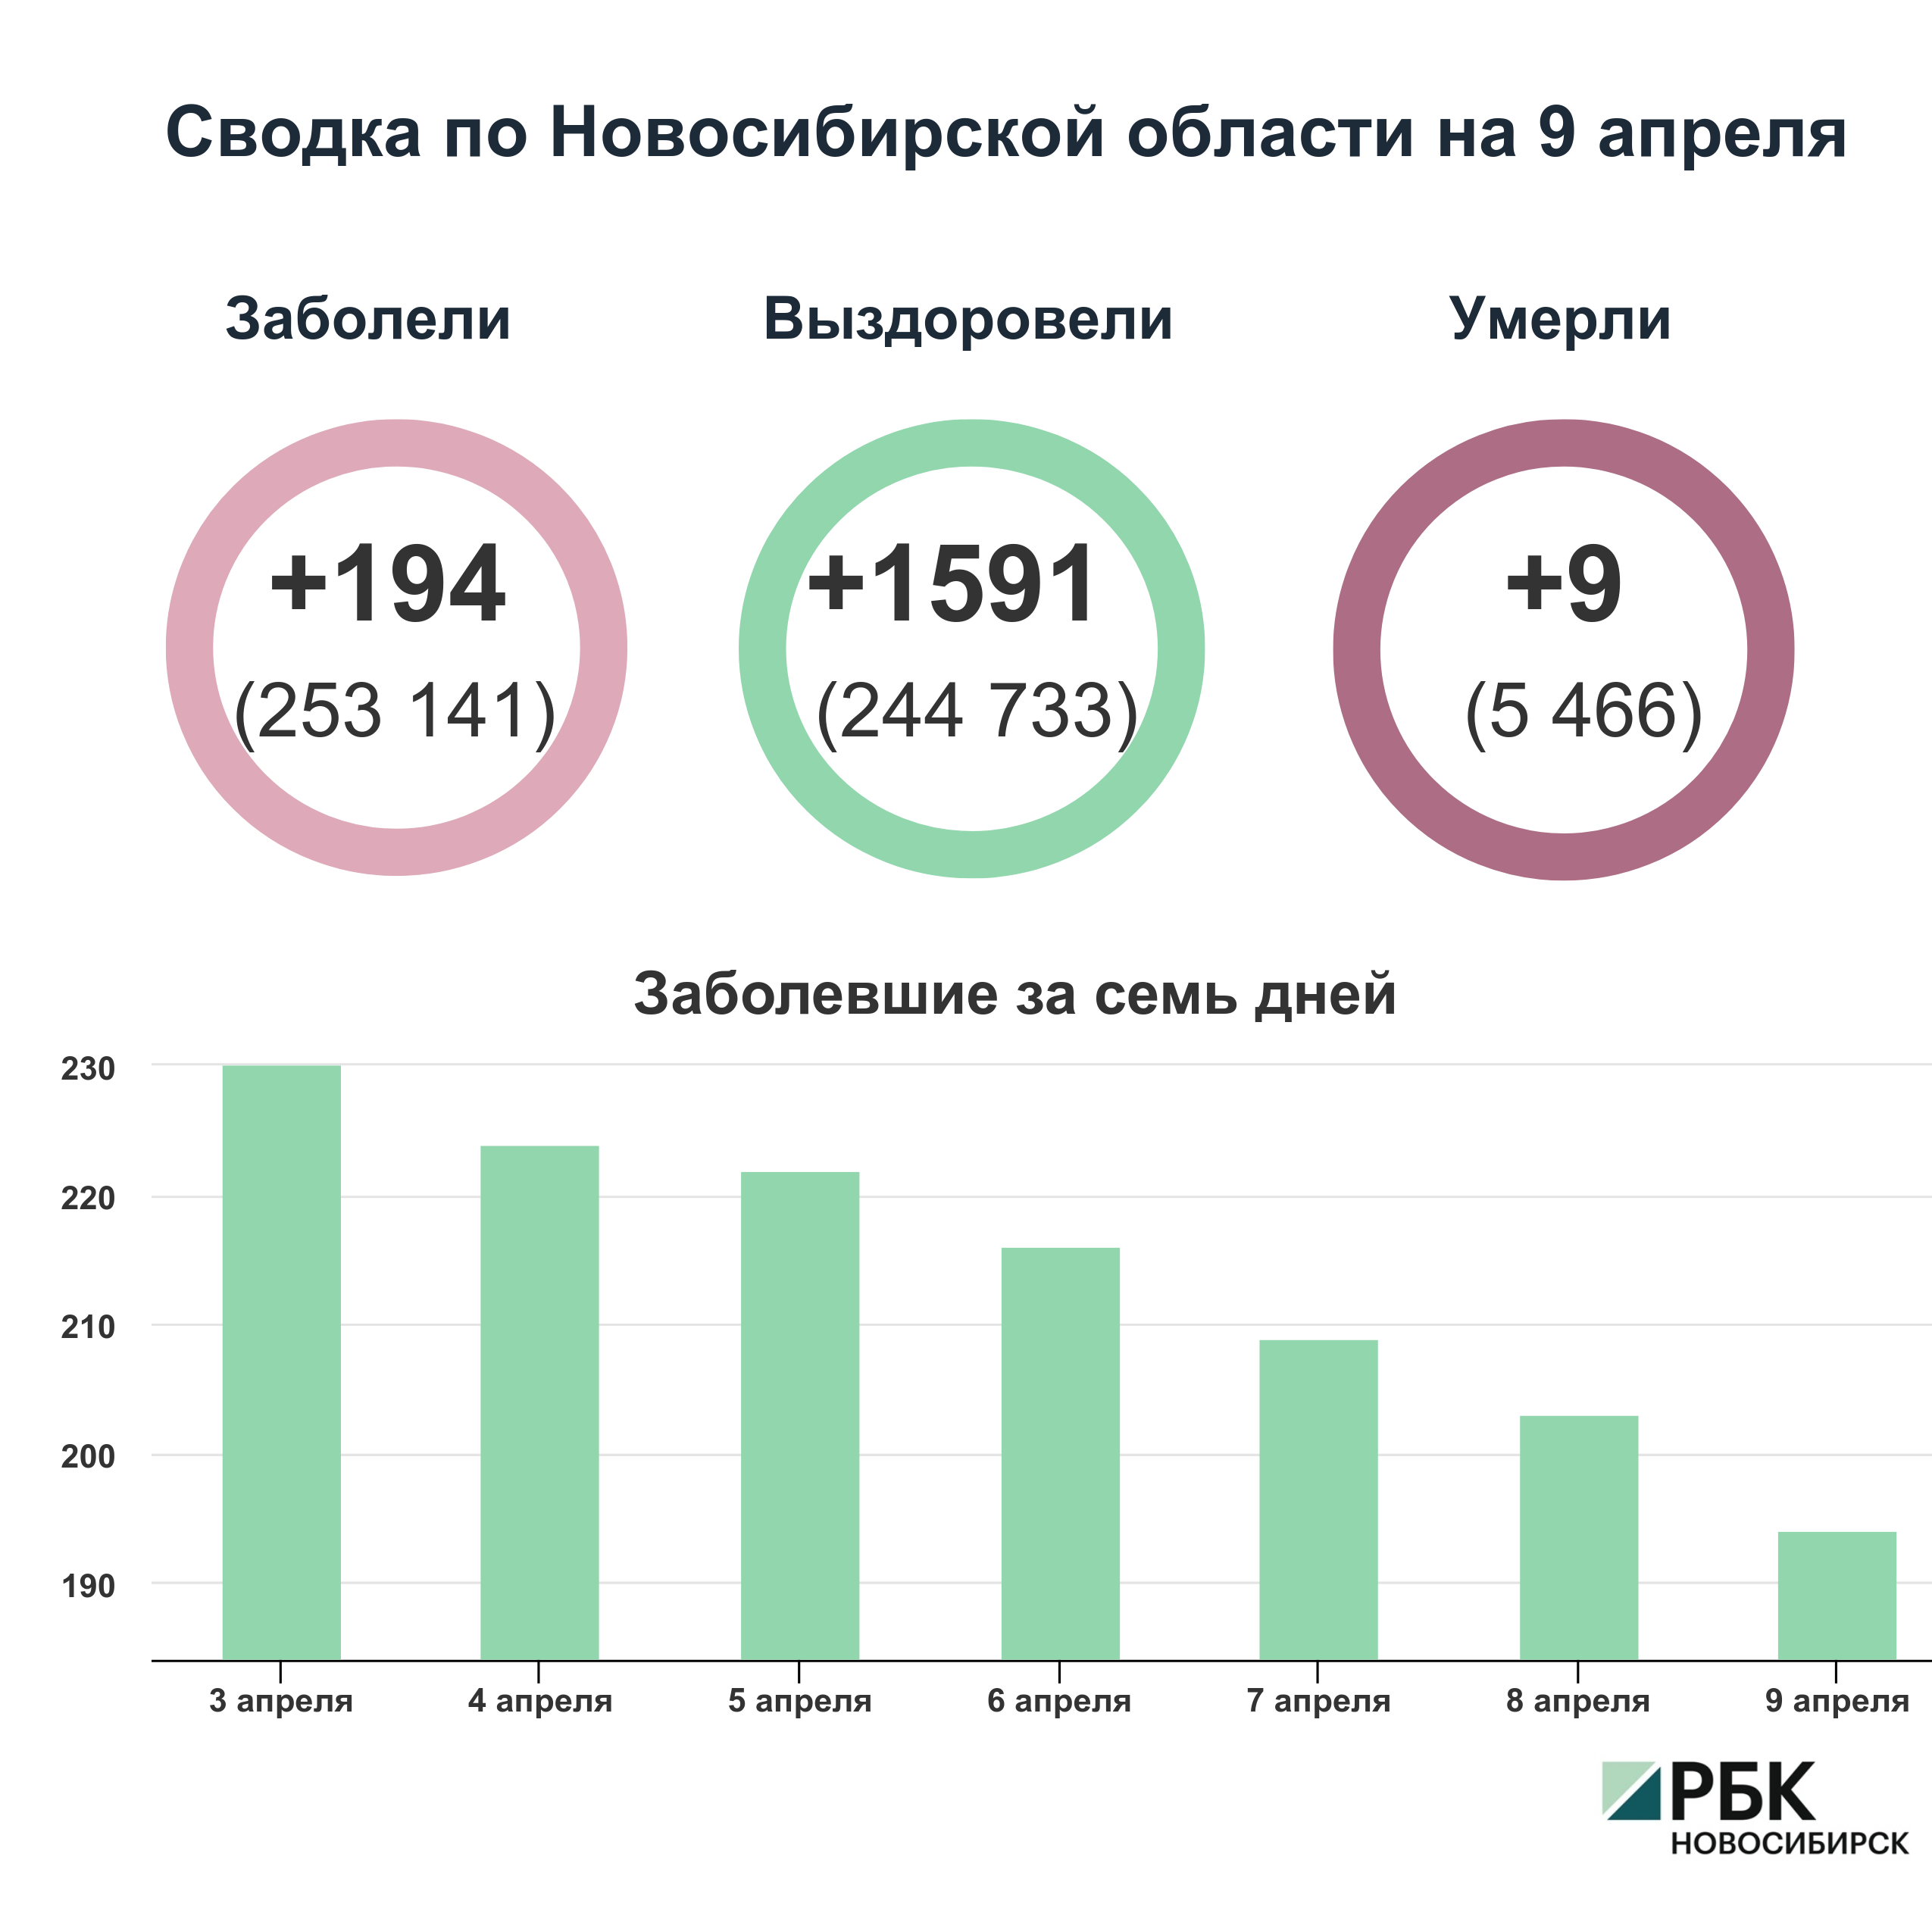 Коронавирус в Новосибирске: сводка на 9 апреля